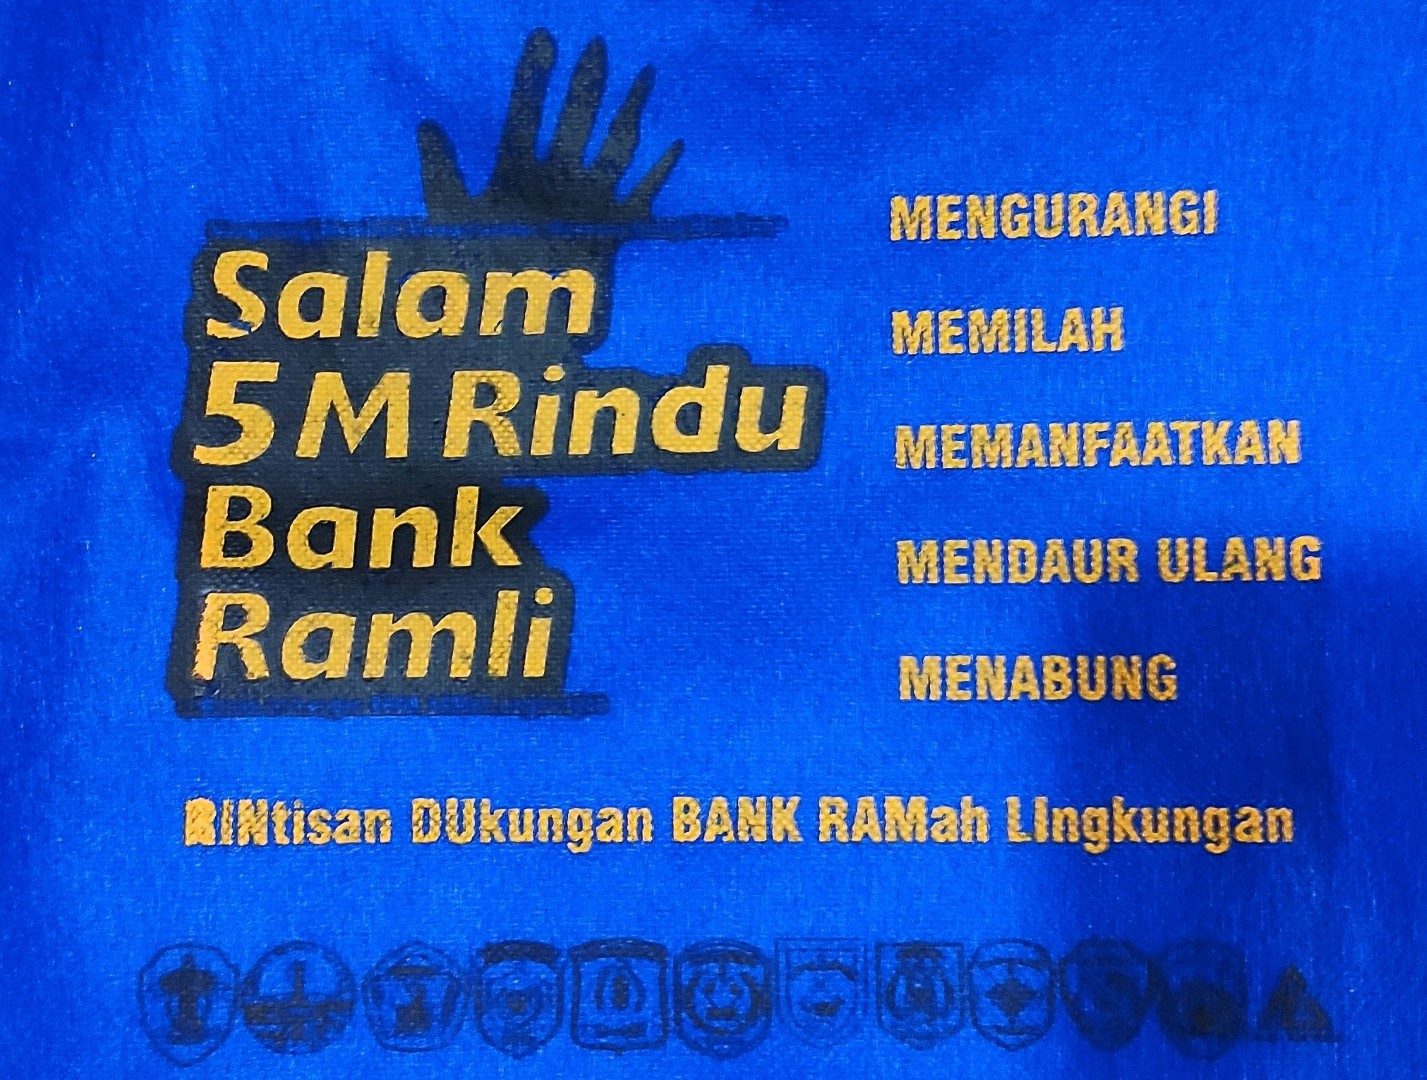 Bank sampah (2) (Large).jpg